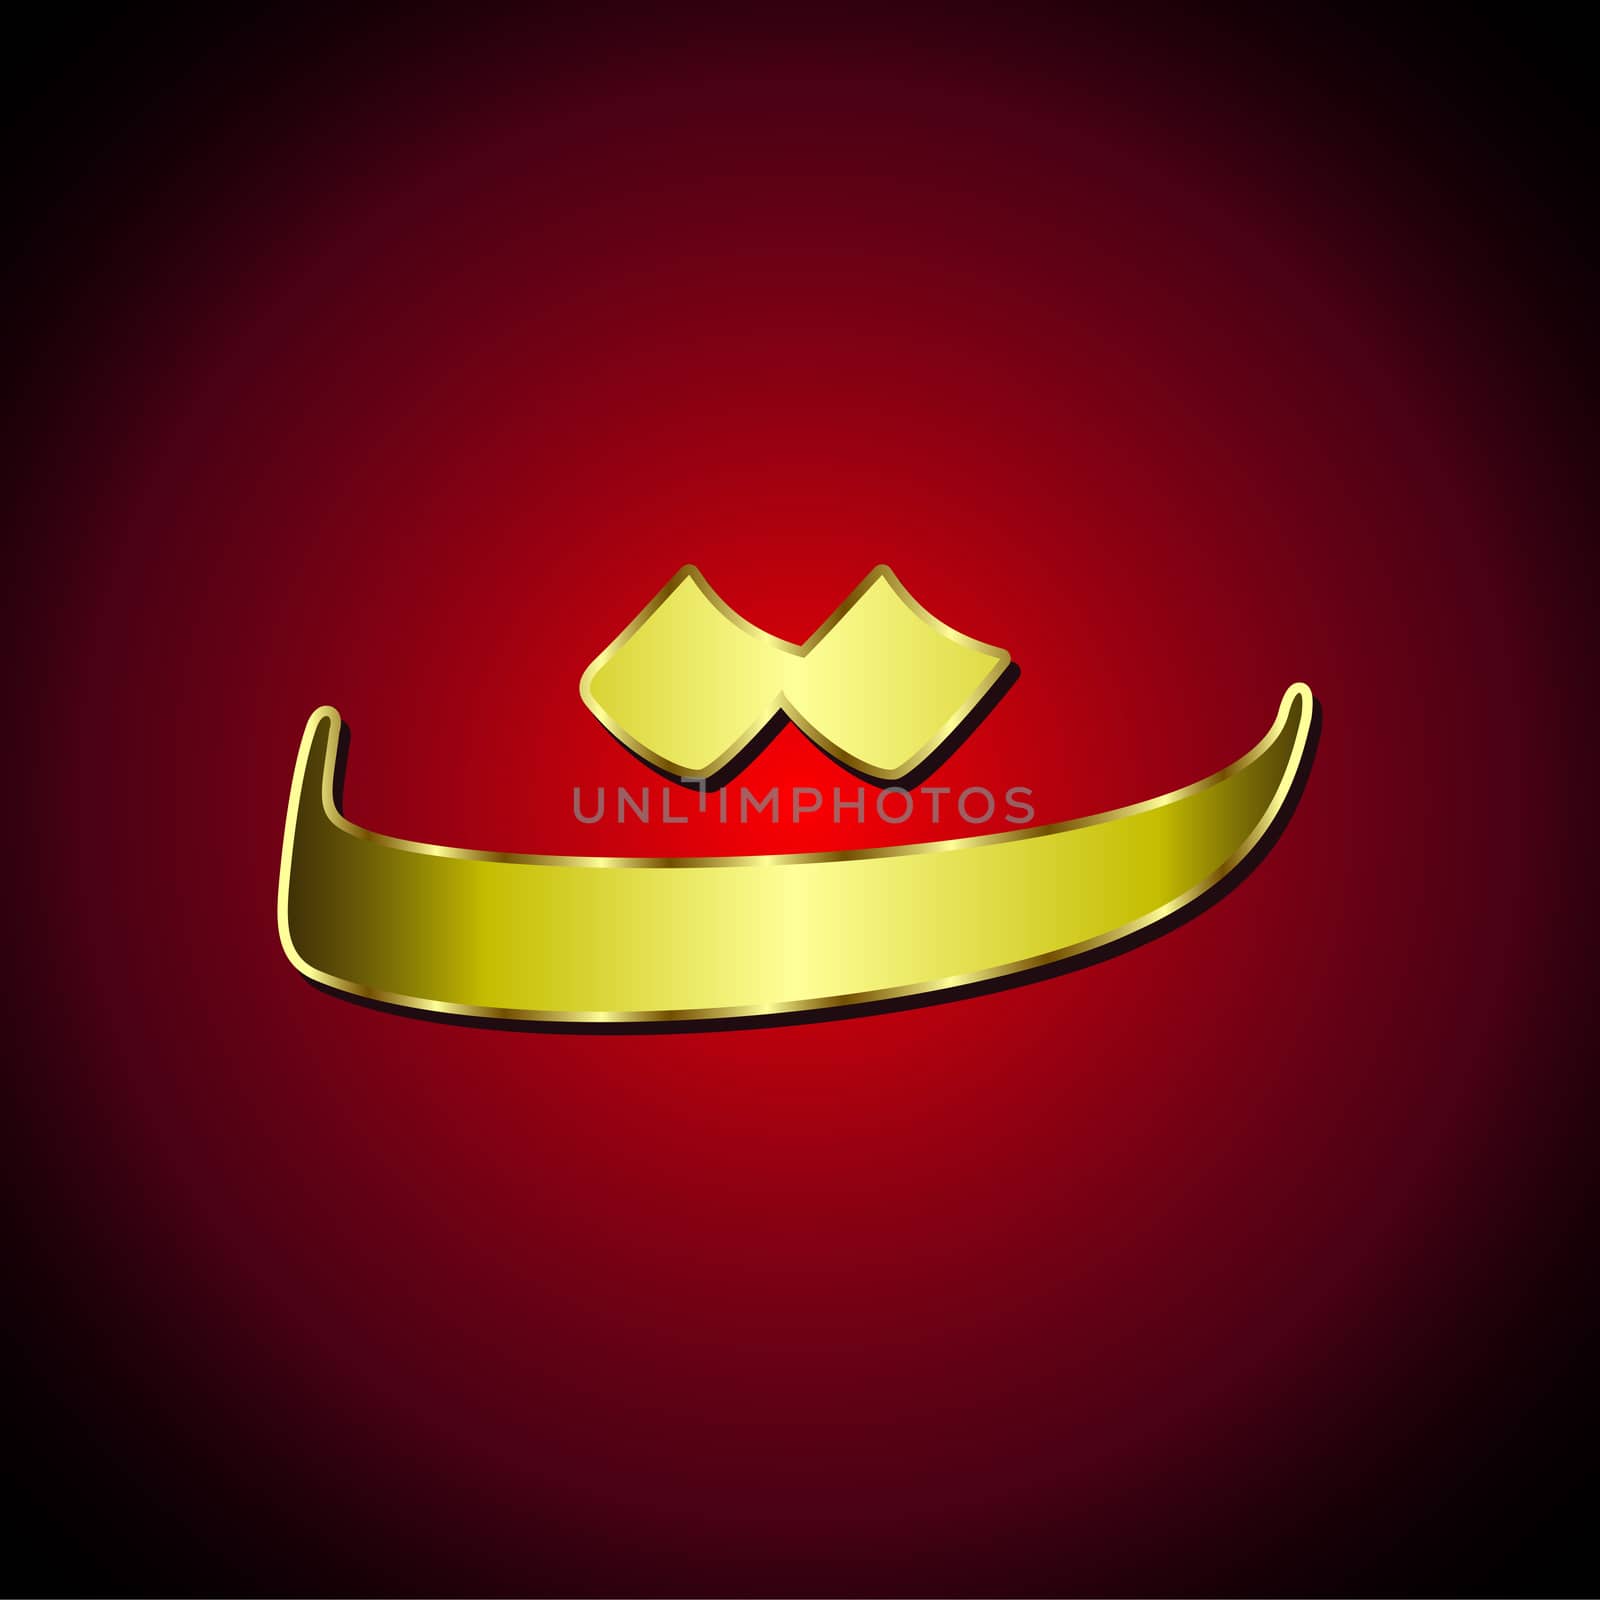 Arabic Alphabet by Crownaart